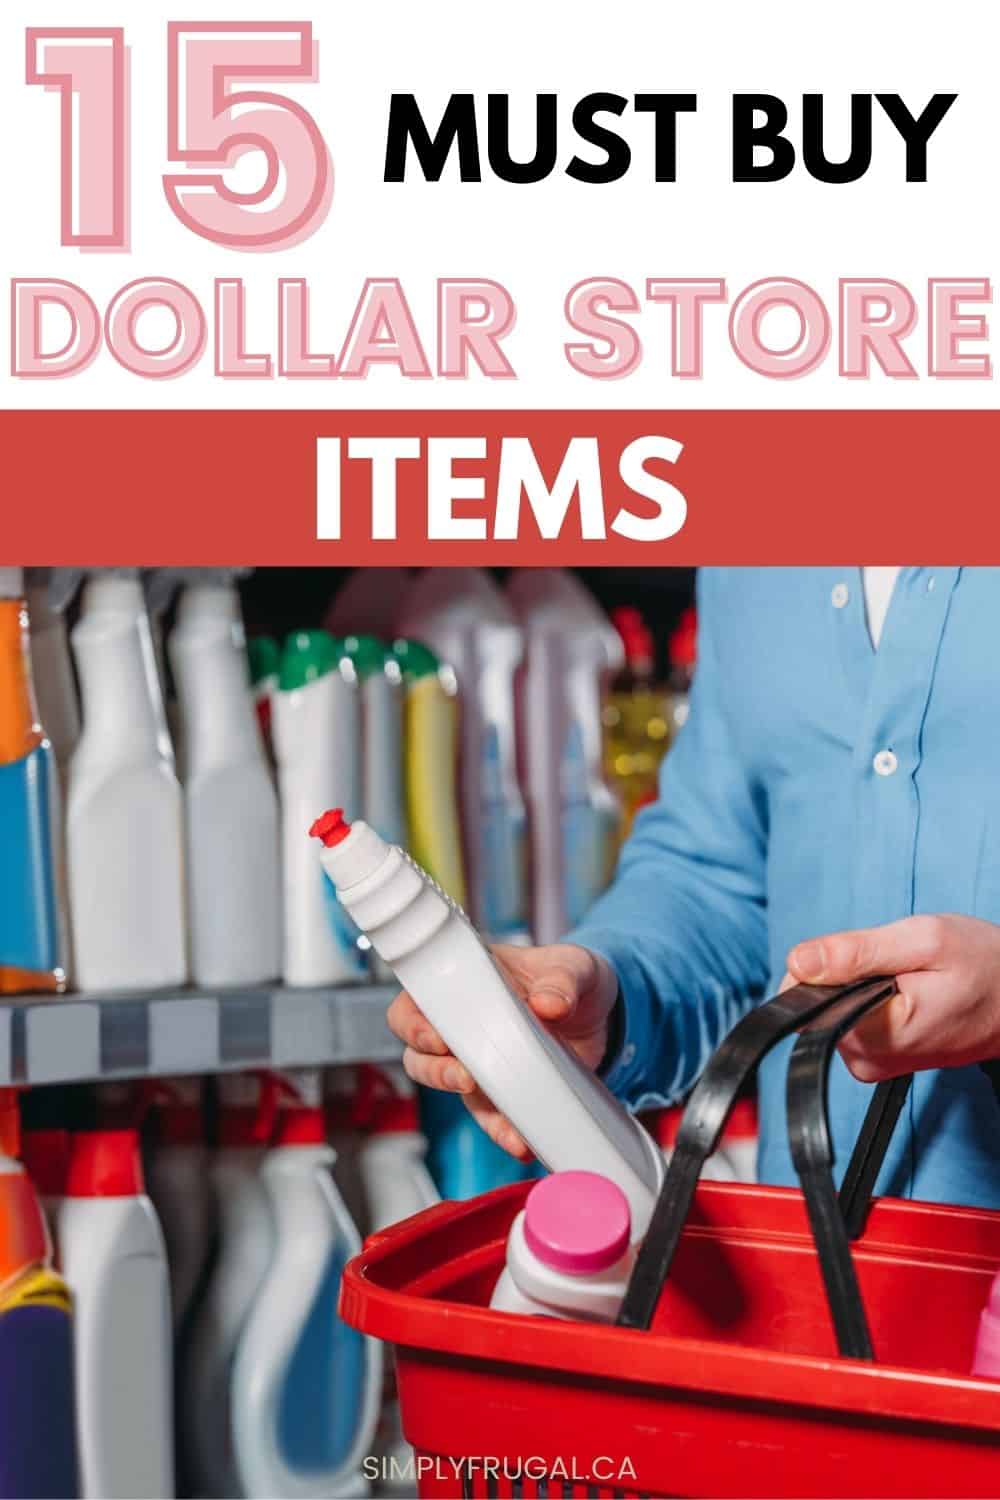 15 Must Buy Dollar Store Items